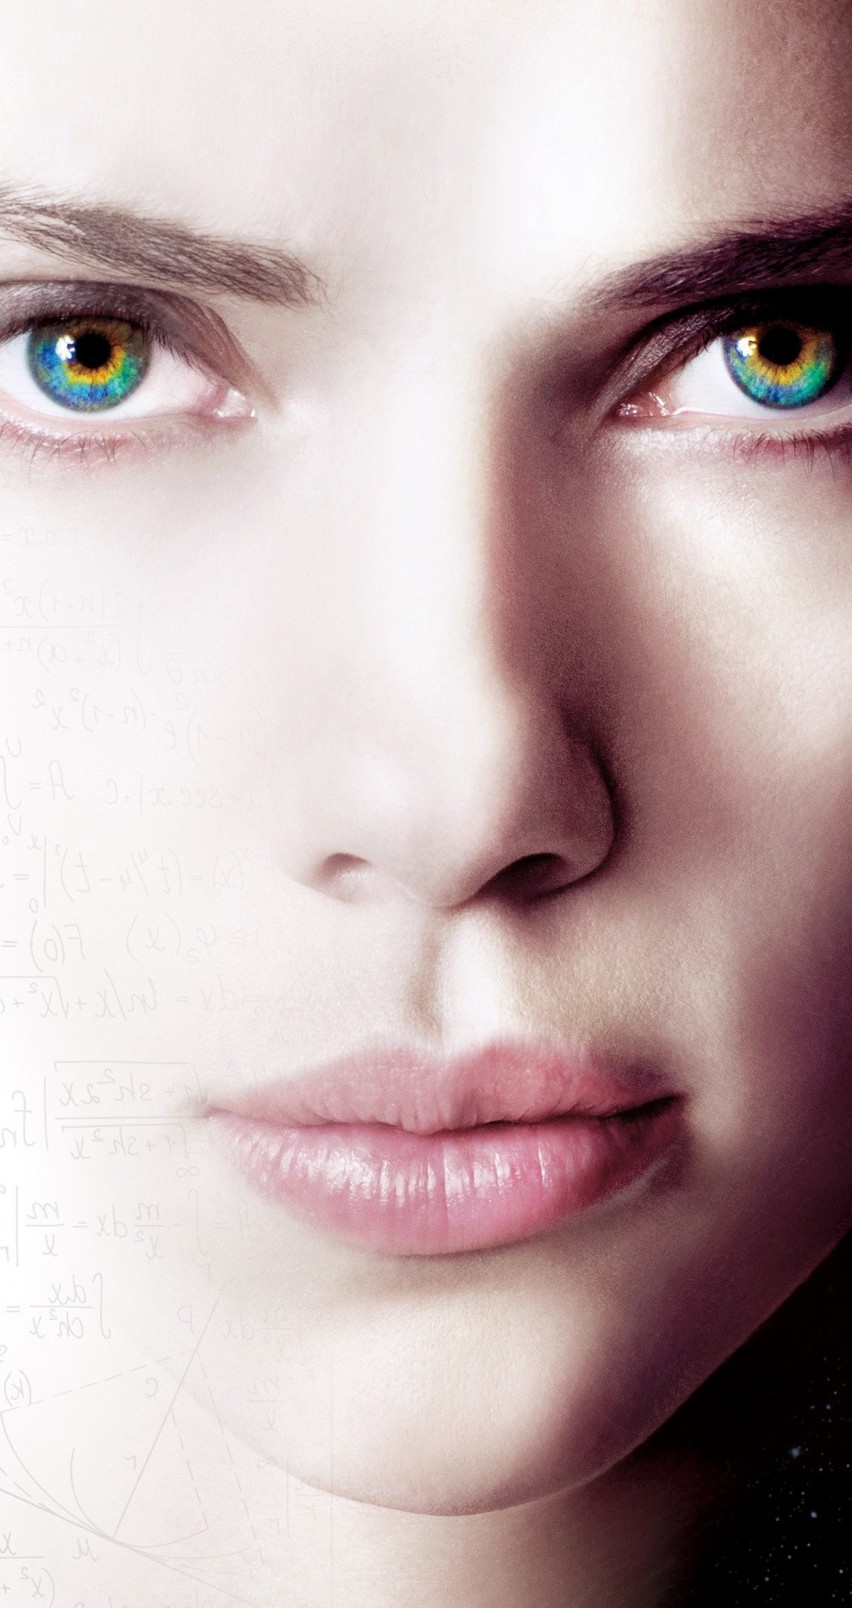 Scarlett Johansson As Lucy Wallpaper for Apple iPhone 6 / 6s